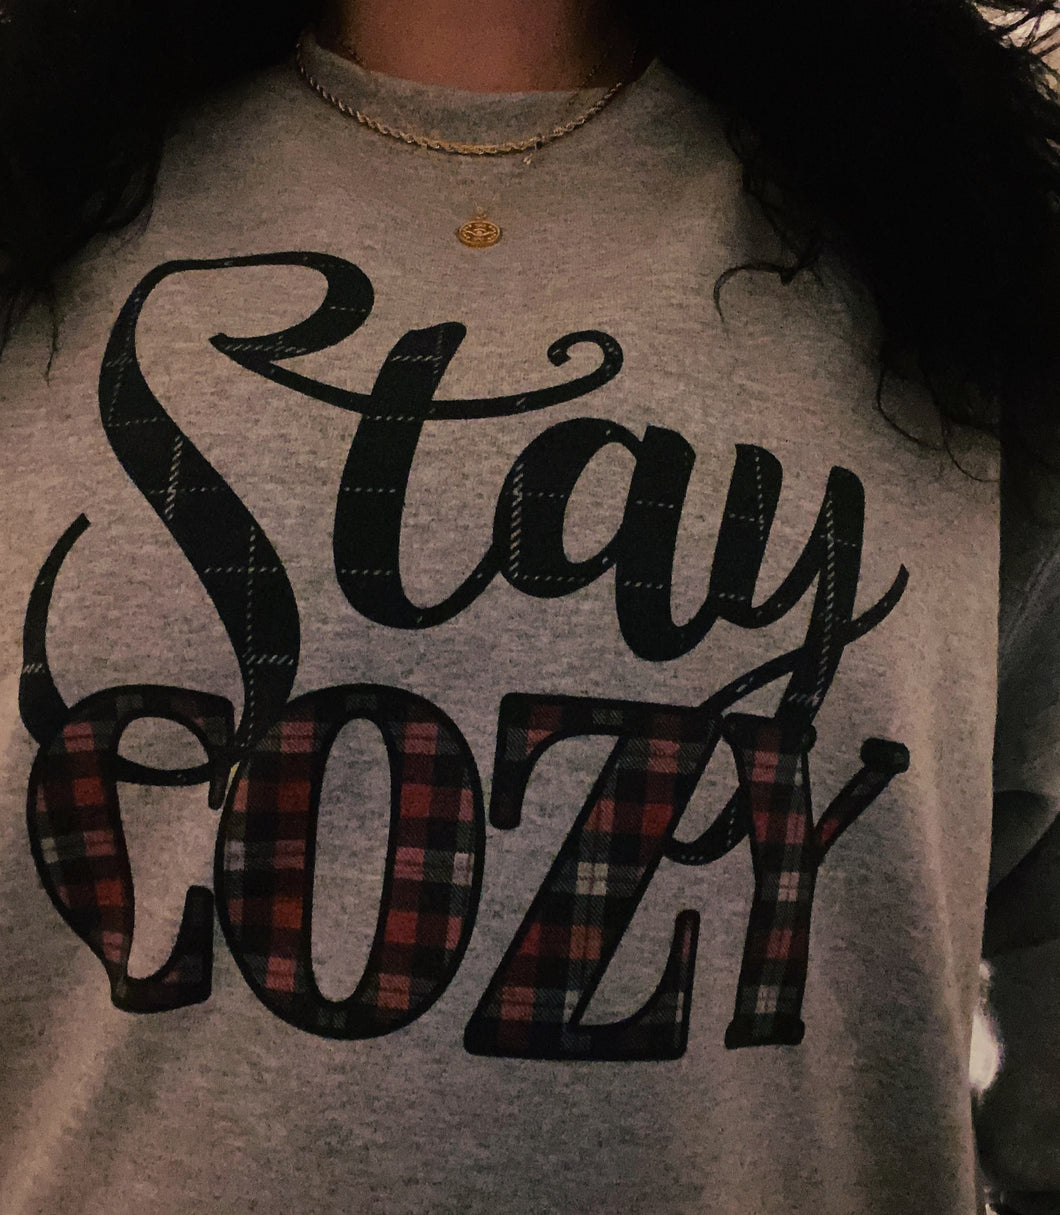 Stay Cozy